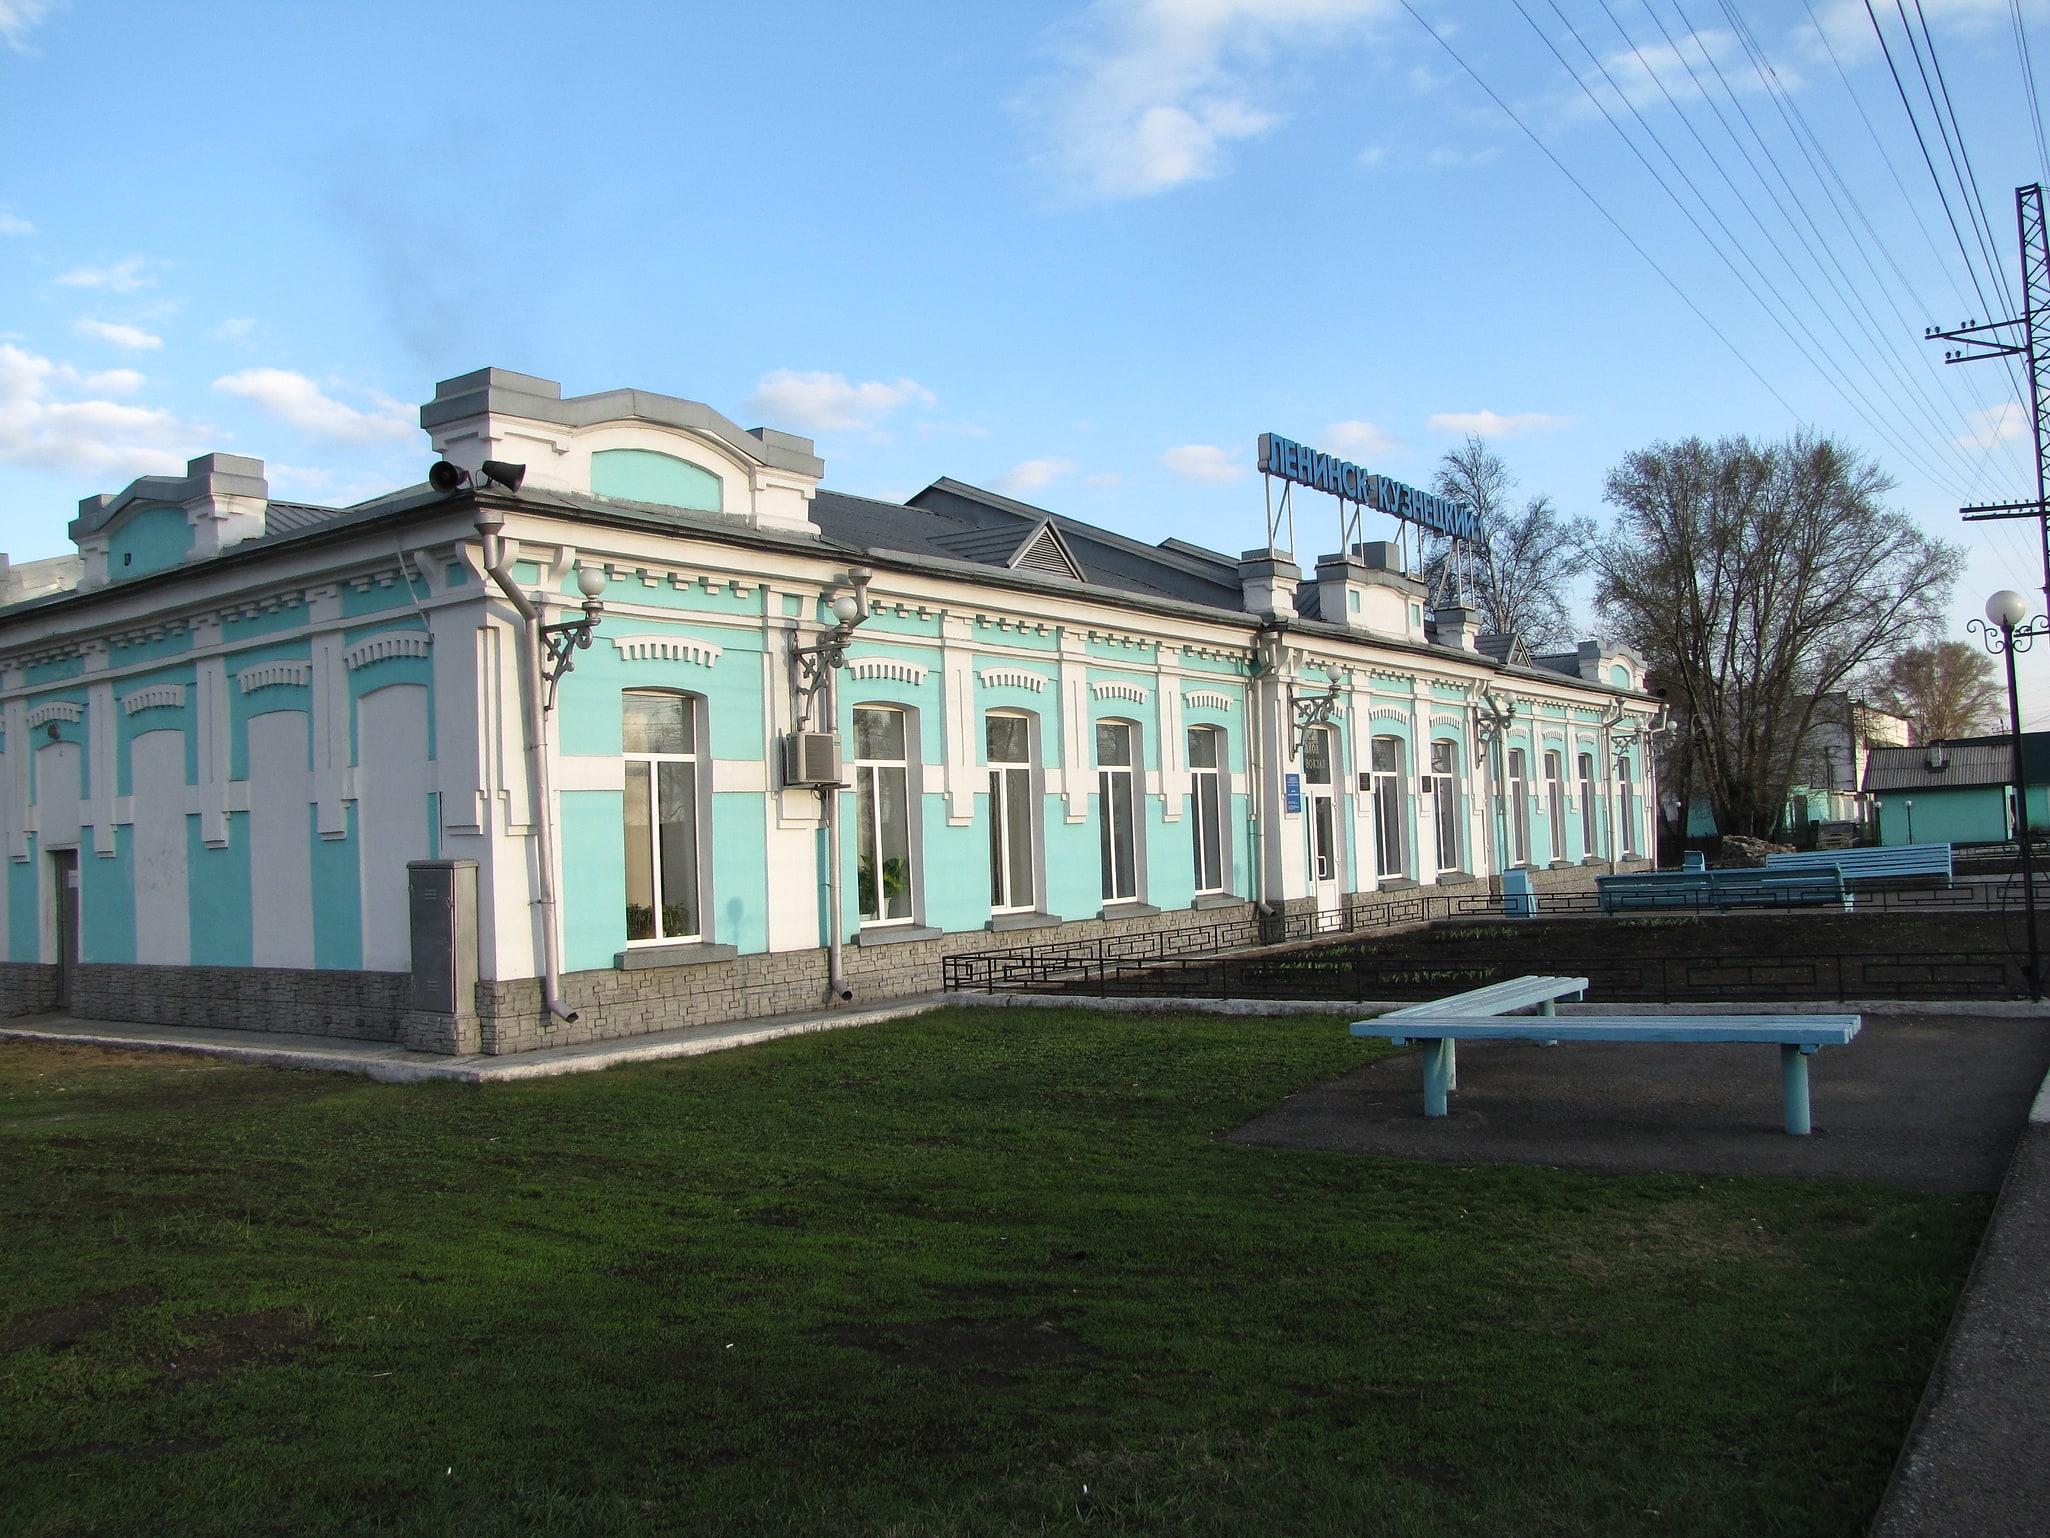 Leninsk-Kuznetsky, Russia